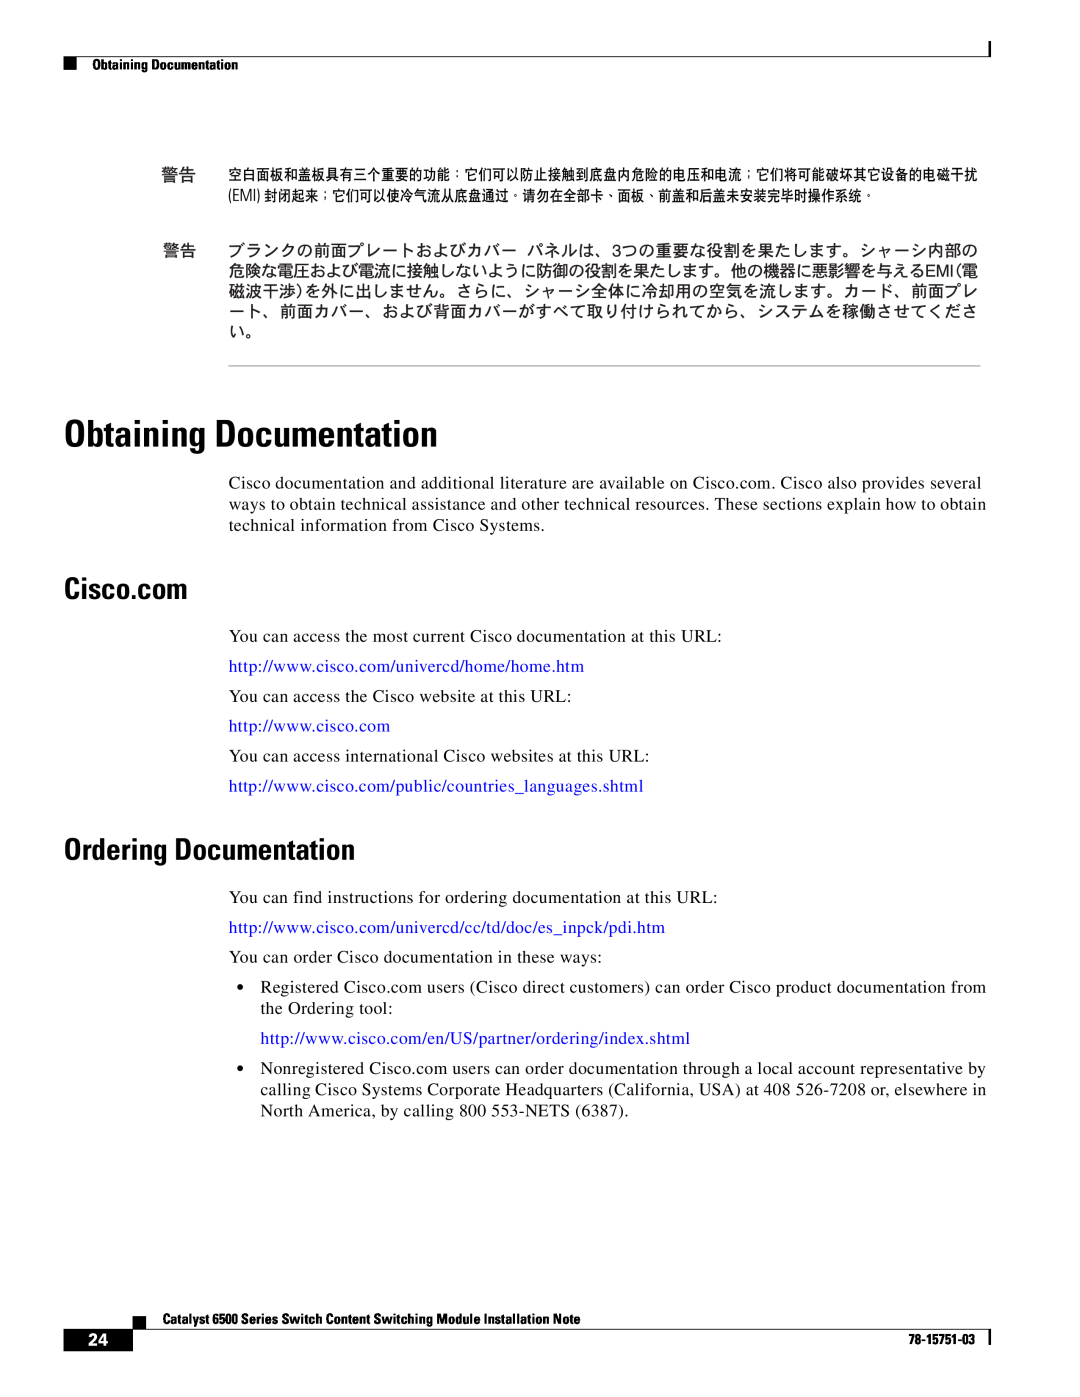 Cisco Systems WS-X6066-SLB-APC manual Obtaining Documentation, Cisco.com, Ordering Documentation 